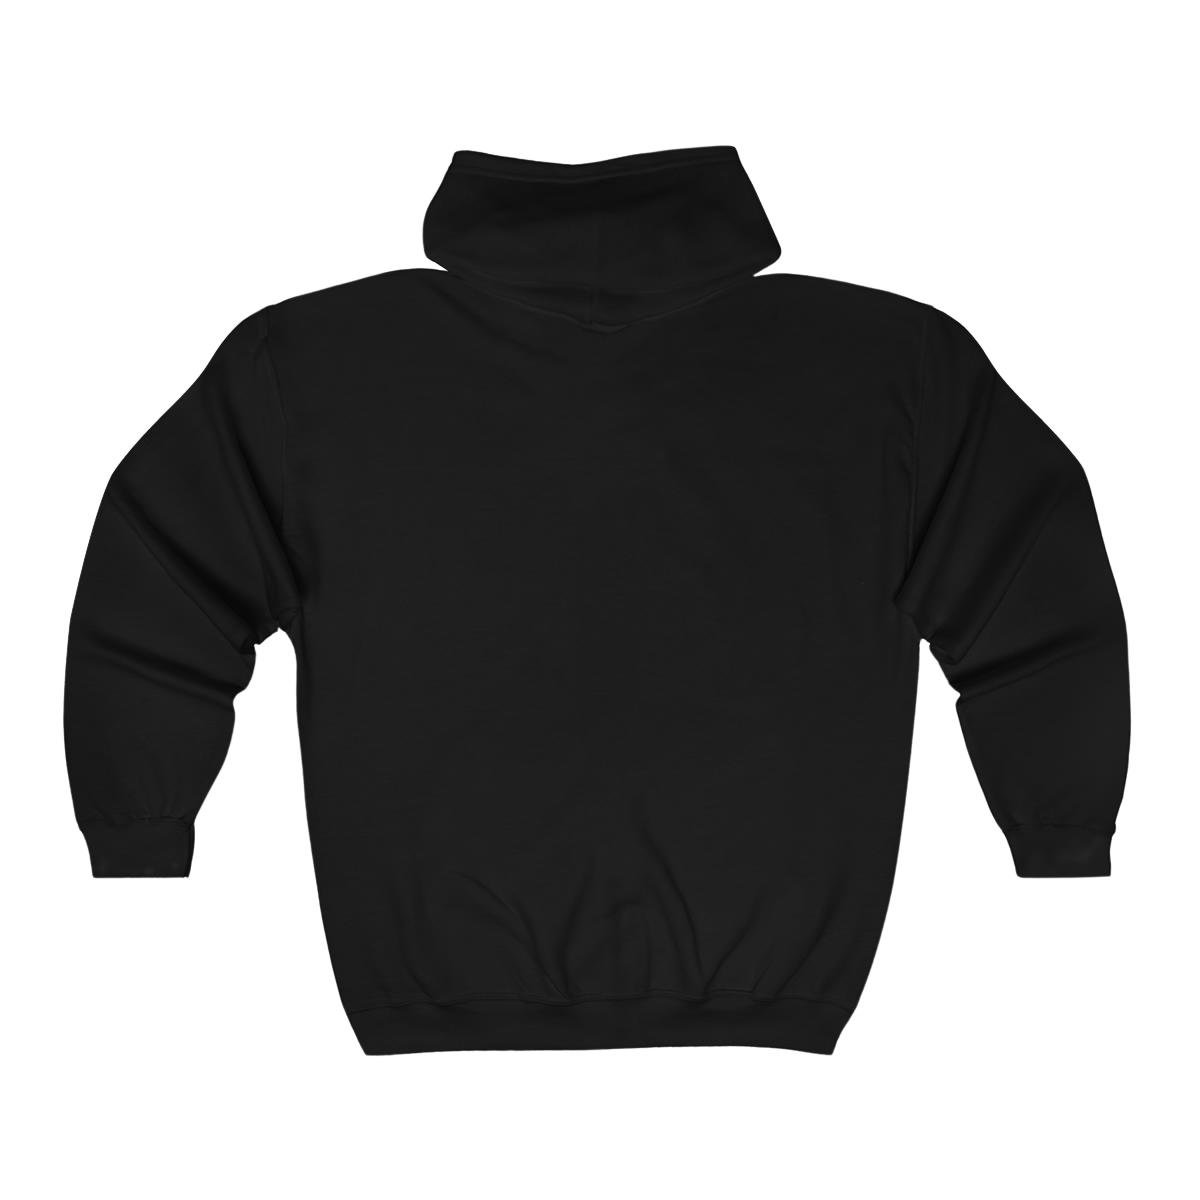 Motivik – The Head Collector Full Zip Hooded Sweatshirt